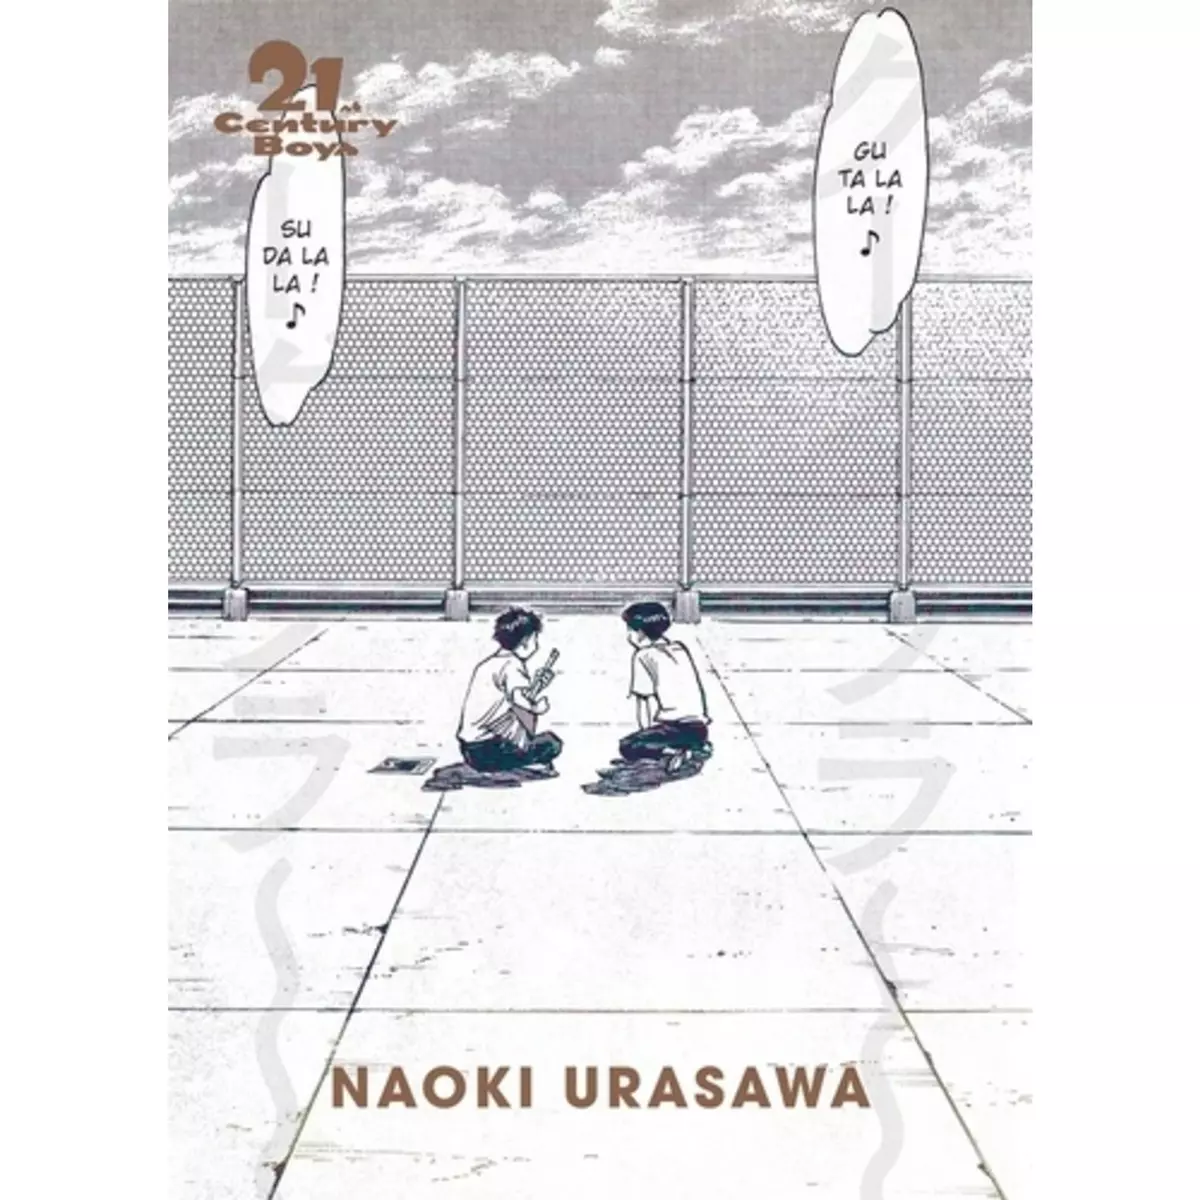  21ST CENTURY BOYS : EDITION PERFECT, Urasawa Naoki